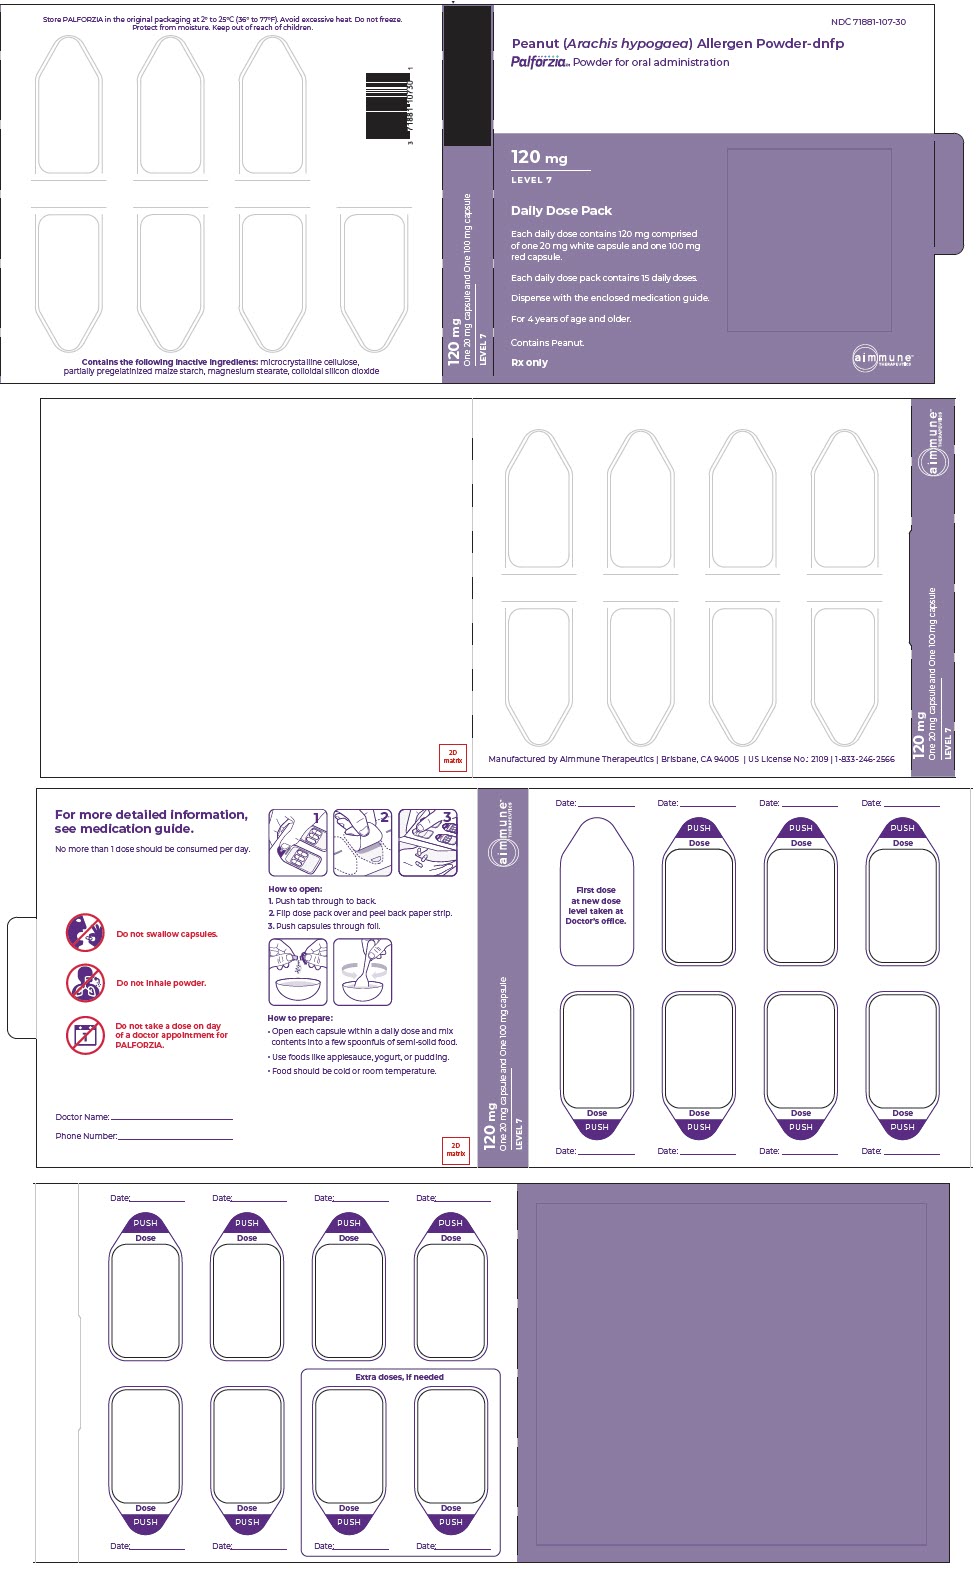 PRINCIPAL DISPLAY PANEL - Kit Dose Pack - 120 mg